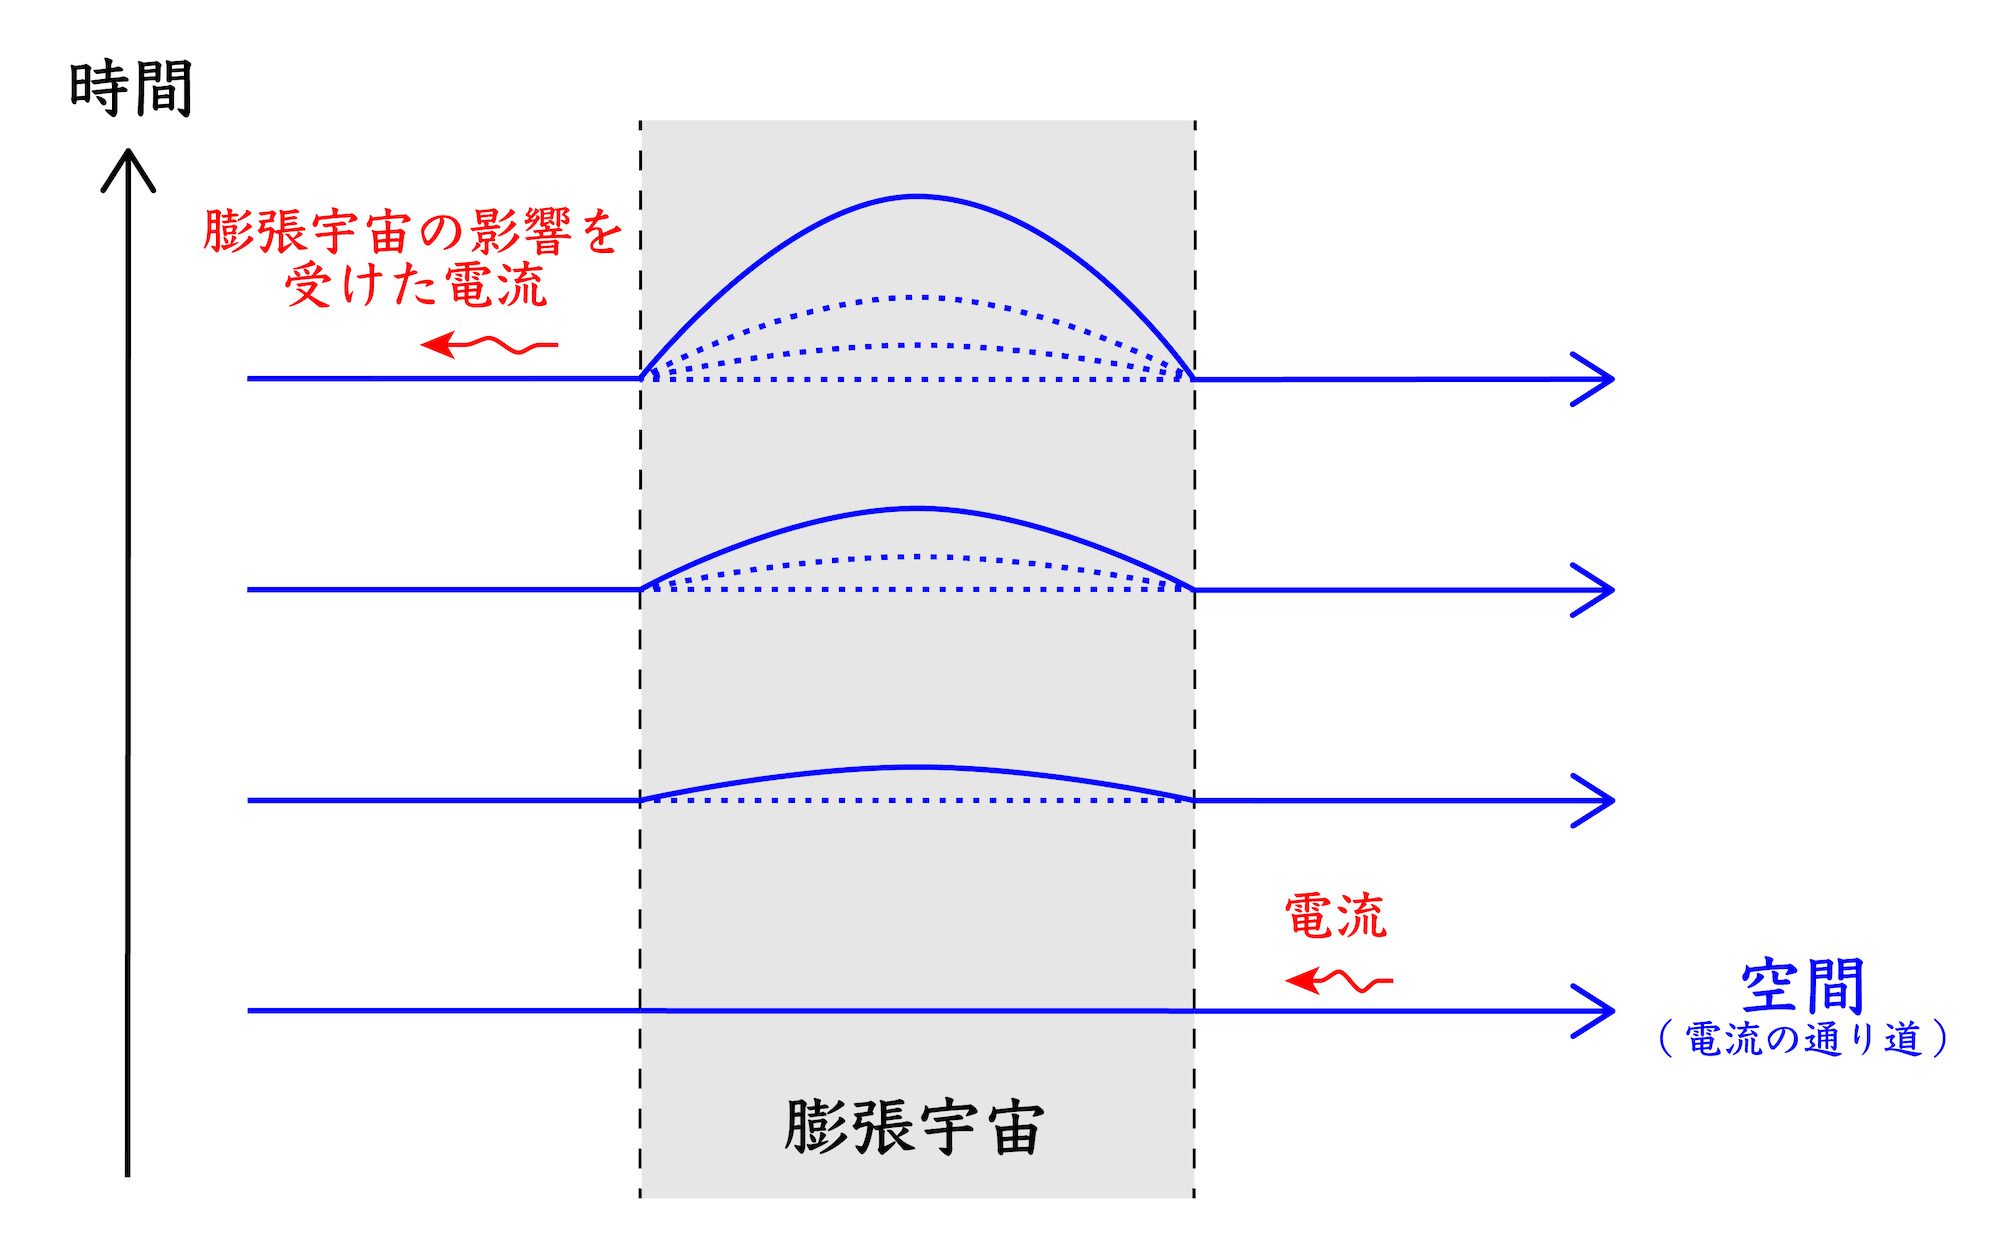 <dfn class="fig">図6</dfn>：<span class="qrinews-figure-title">アナログ膨張宇宙</span>　右から入った電流は、途中のアナログ膨張宇宙の領域を通過して、左へ出ていく。